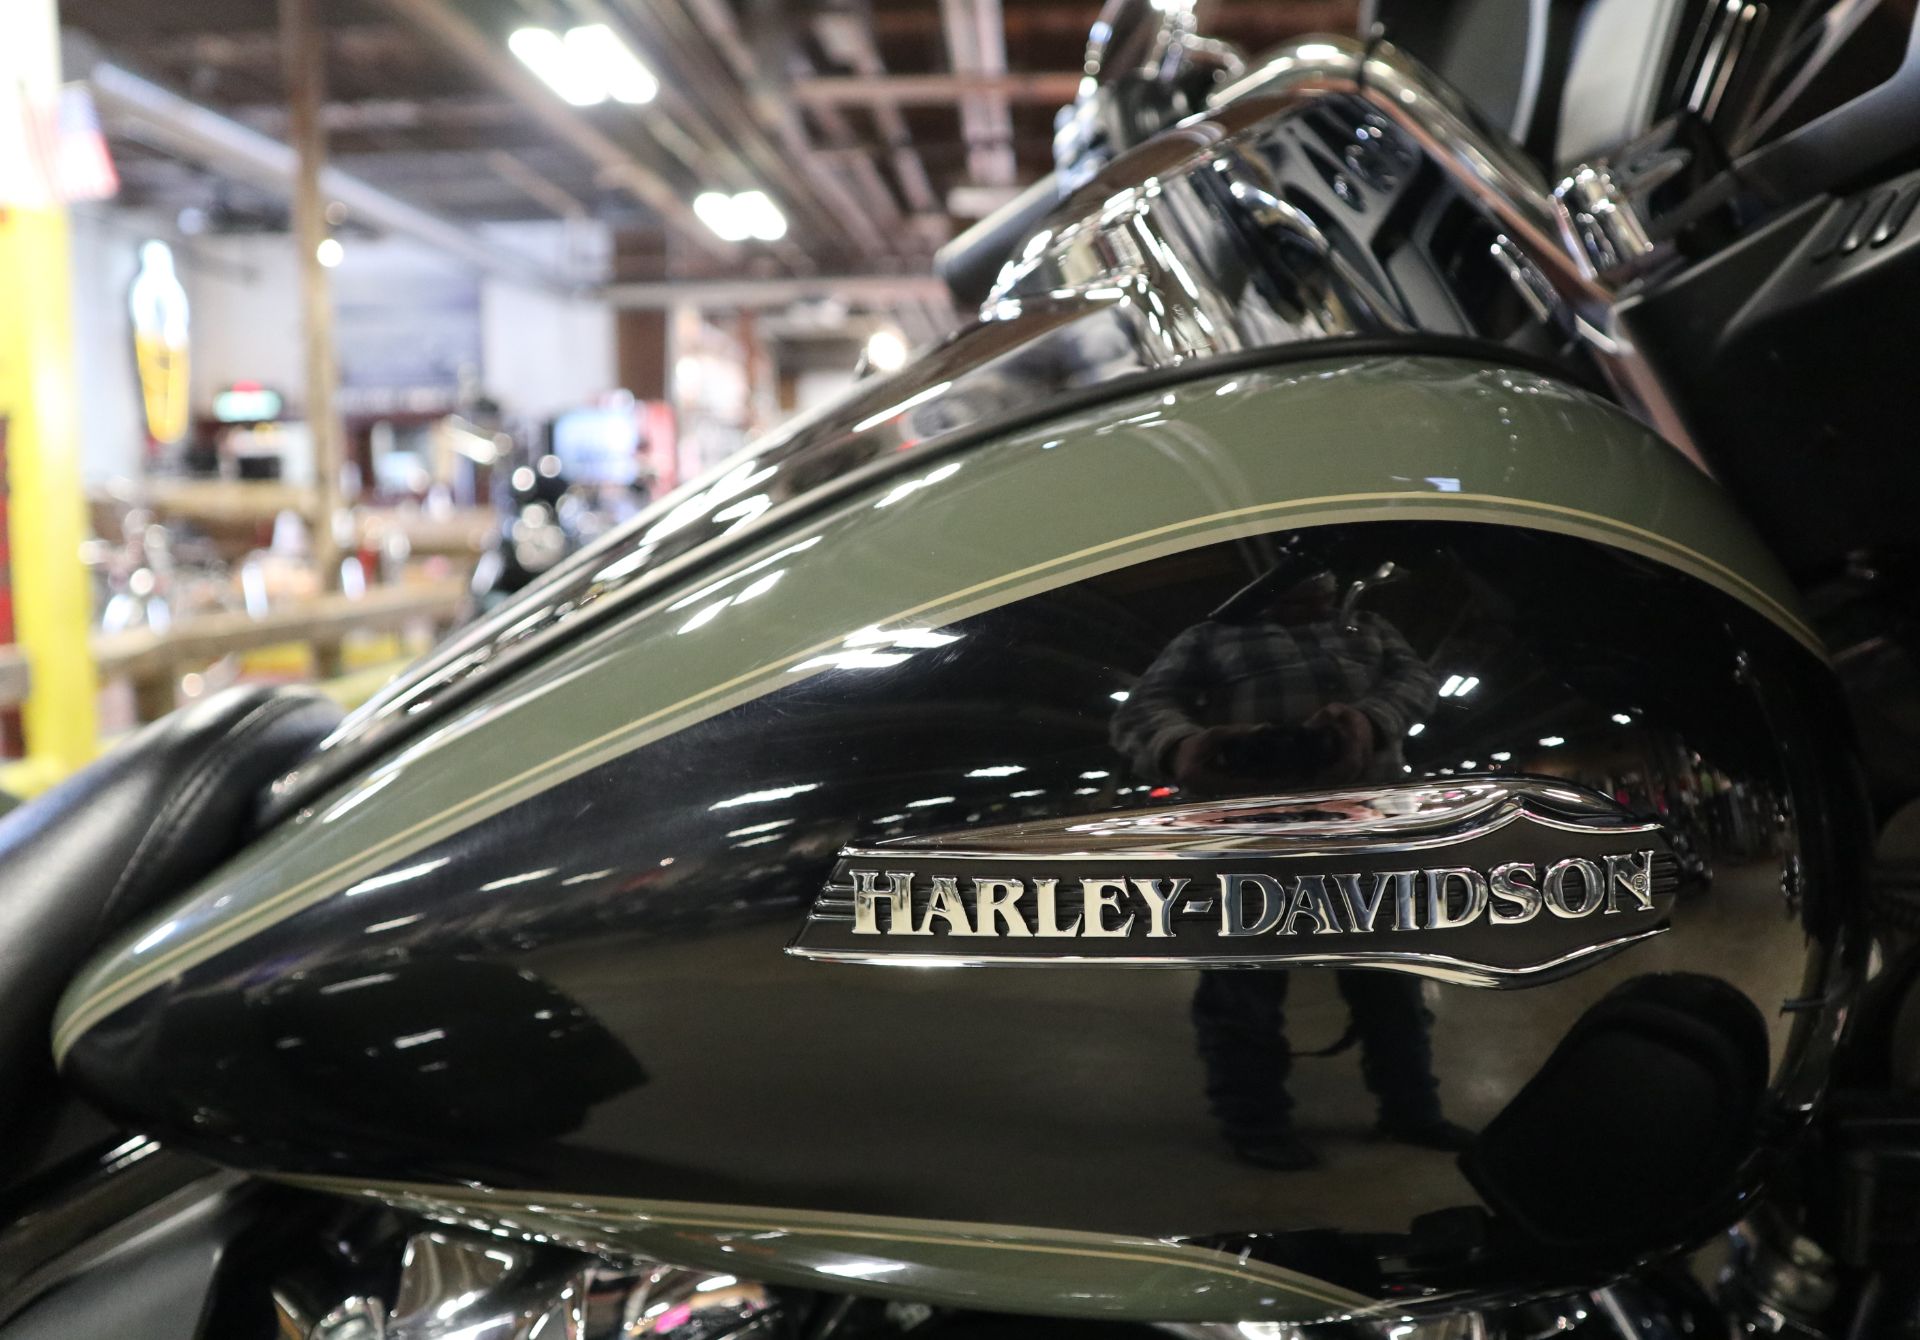 2021 Harley-Davidson Tri Glide® Ultra in New London, Connecticut - Photo 9